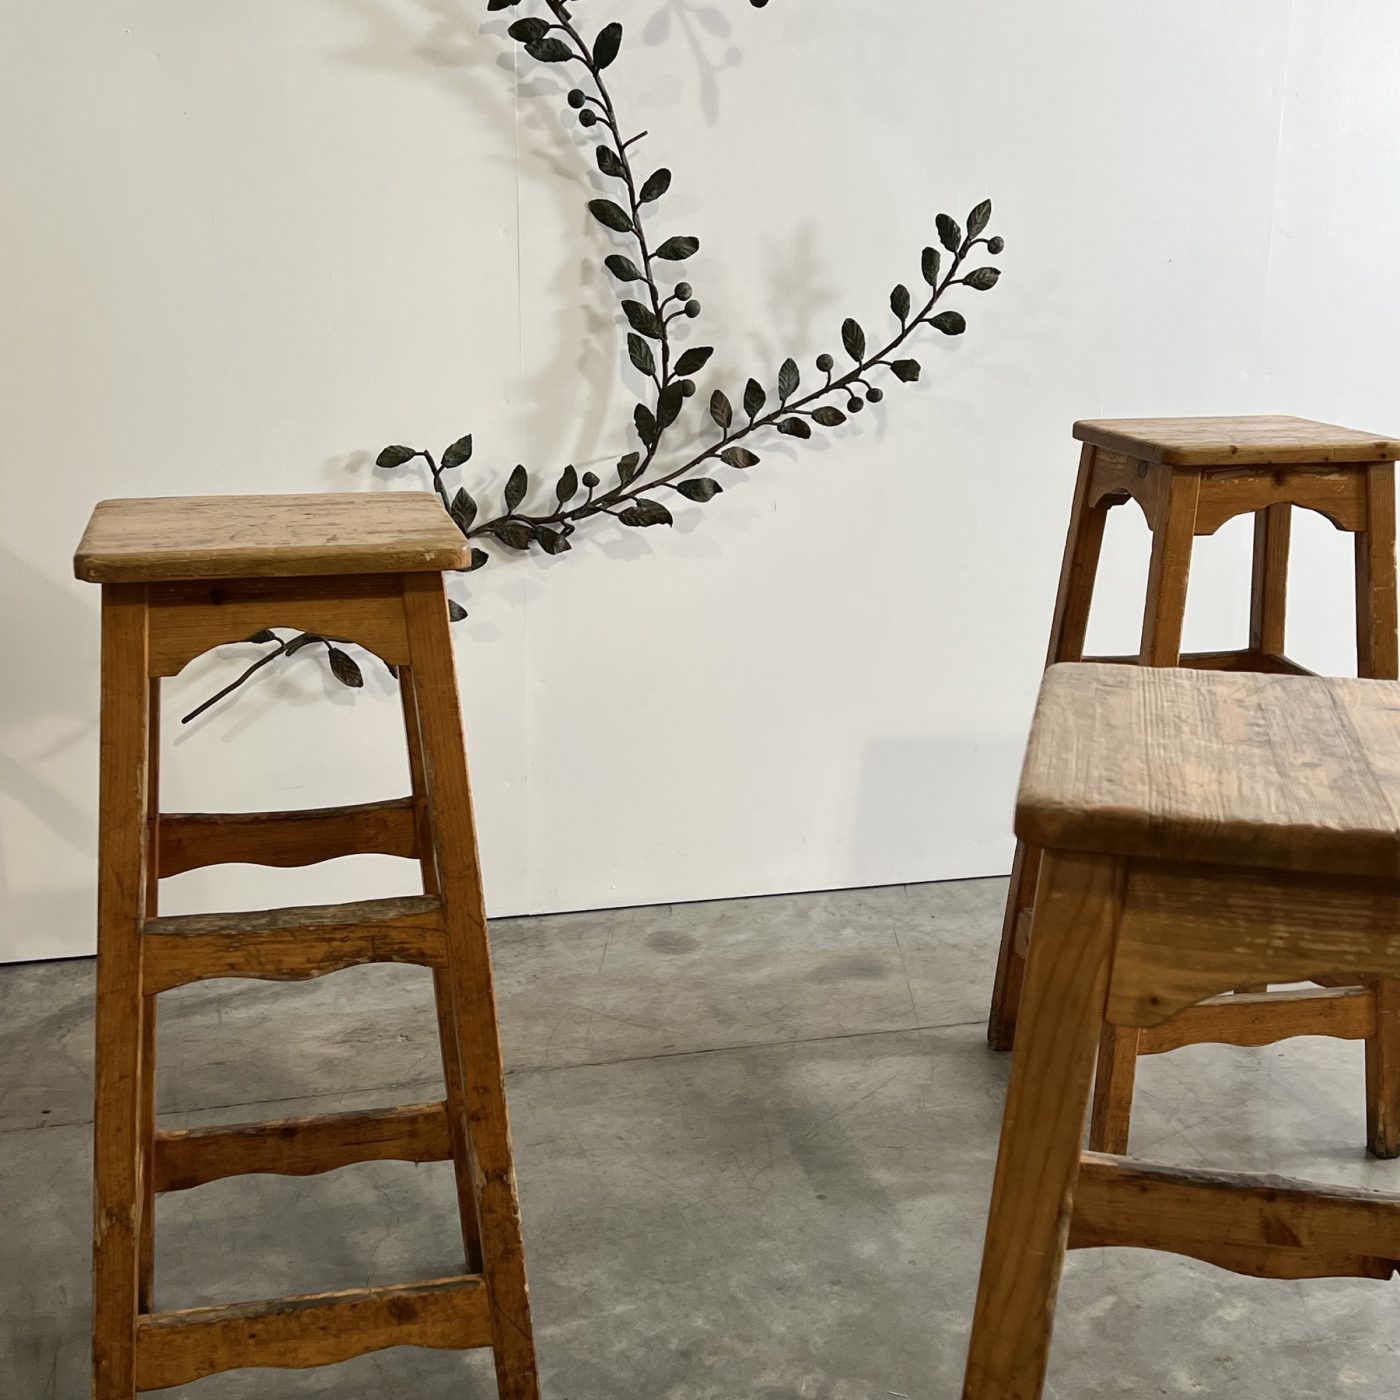 objet-vagabond-artist-stools0004